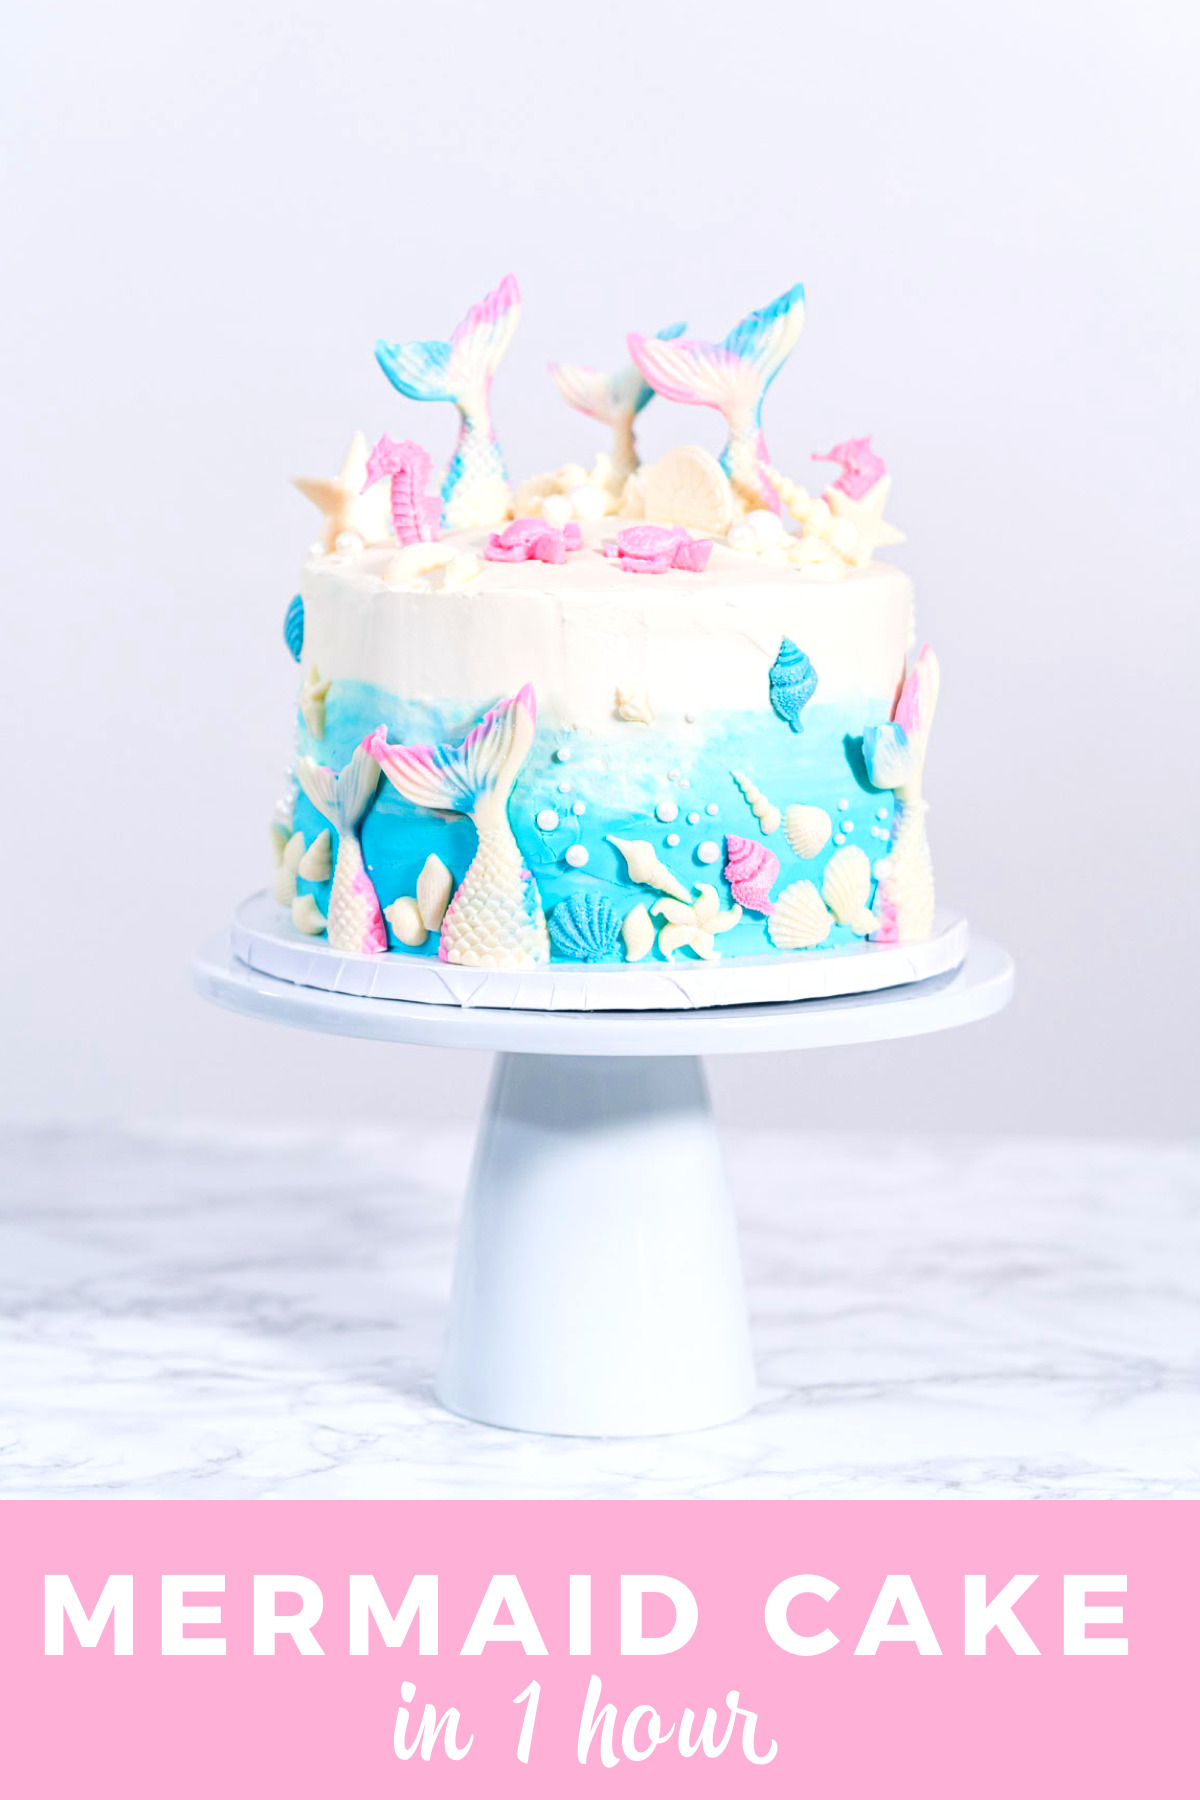 Mermaid 3 layer cake in 1 hour